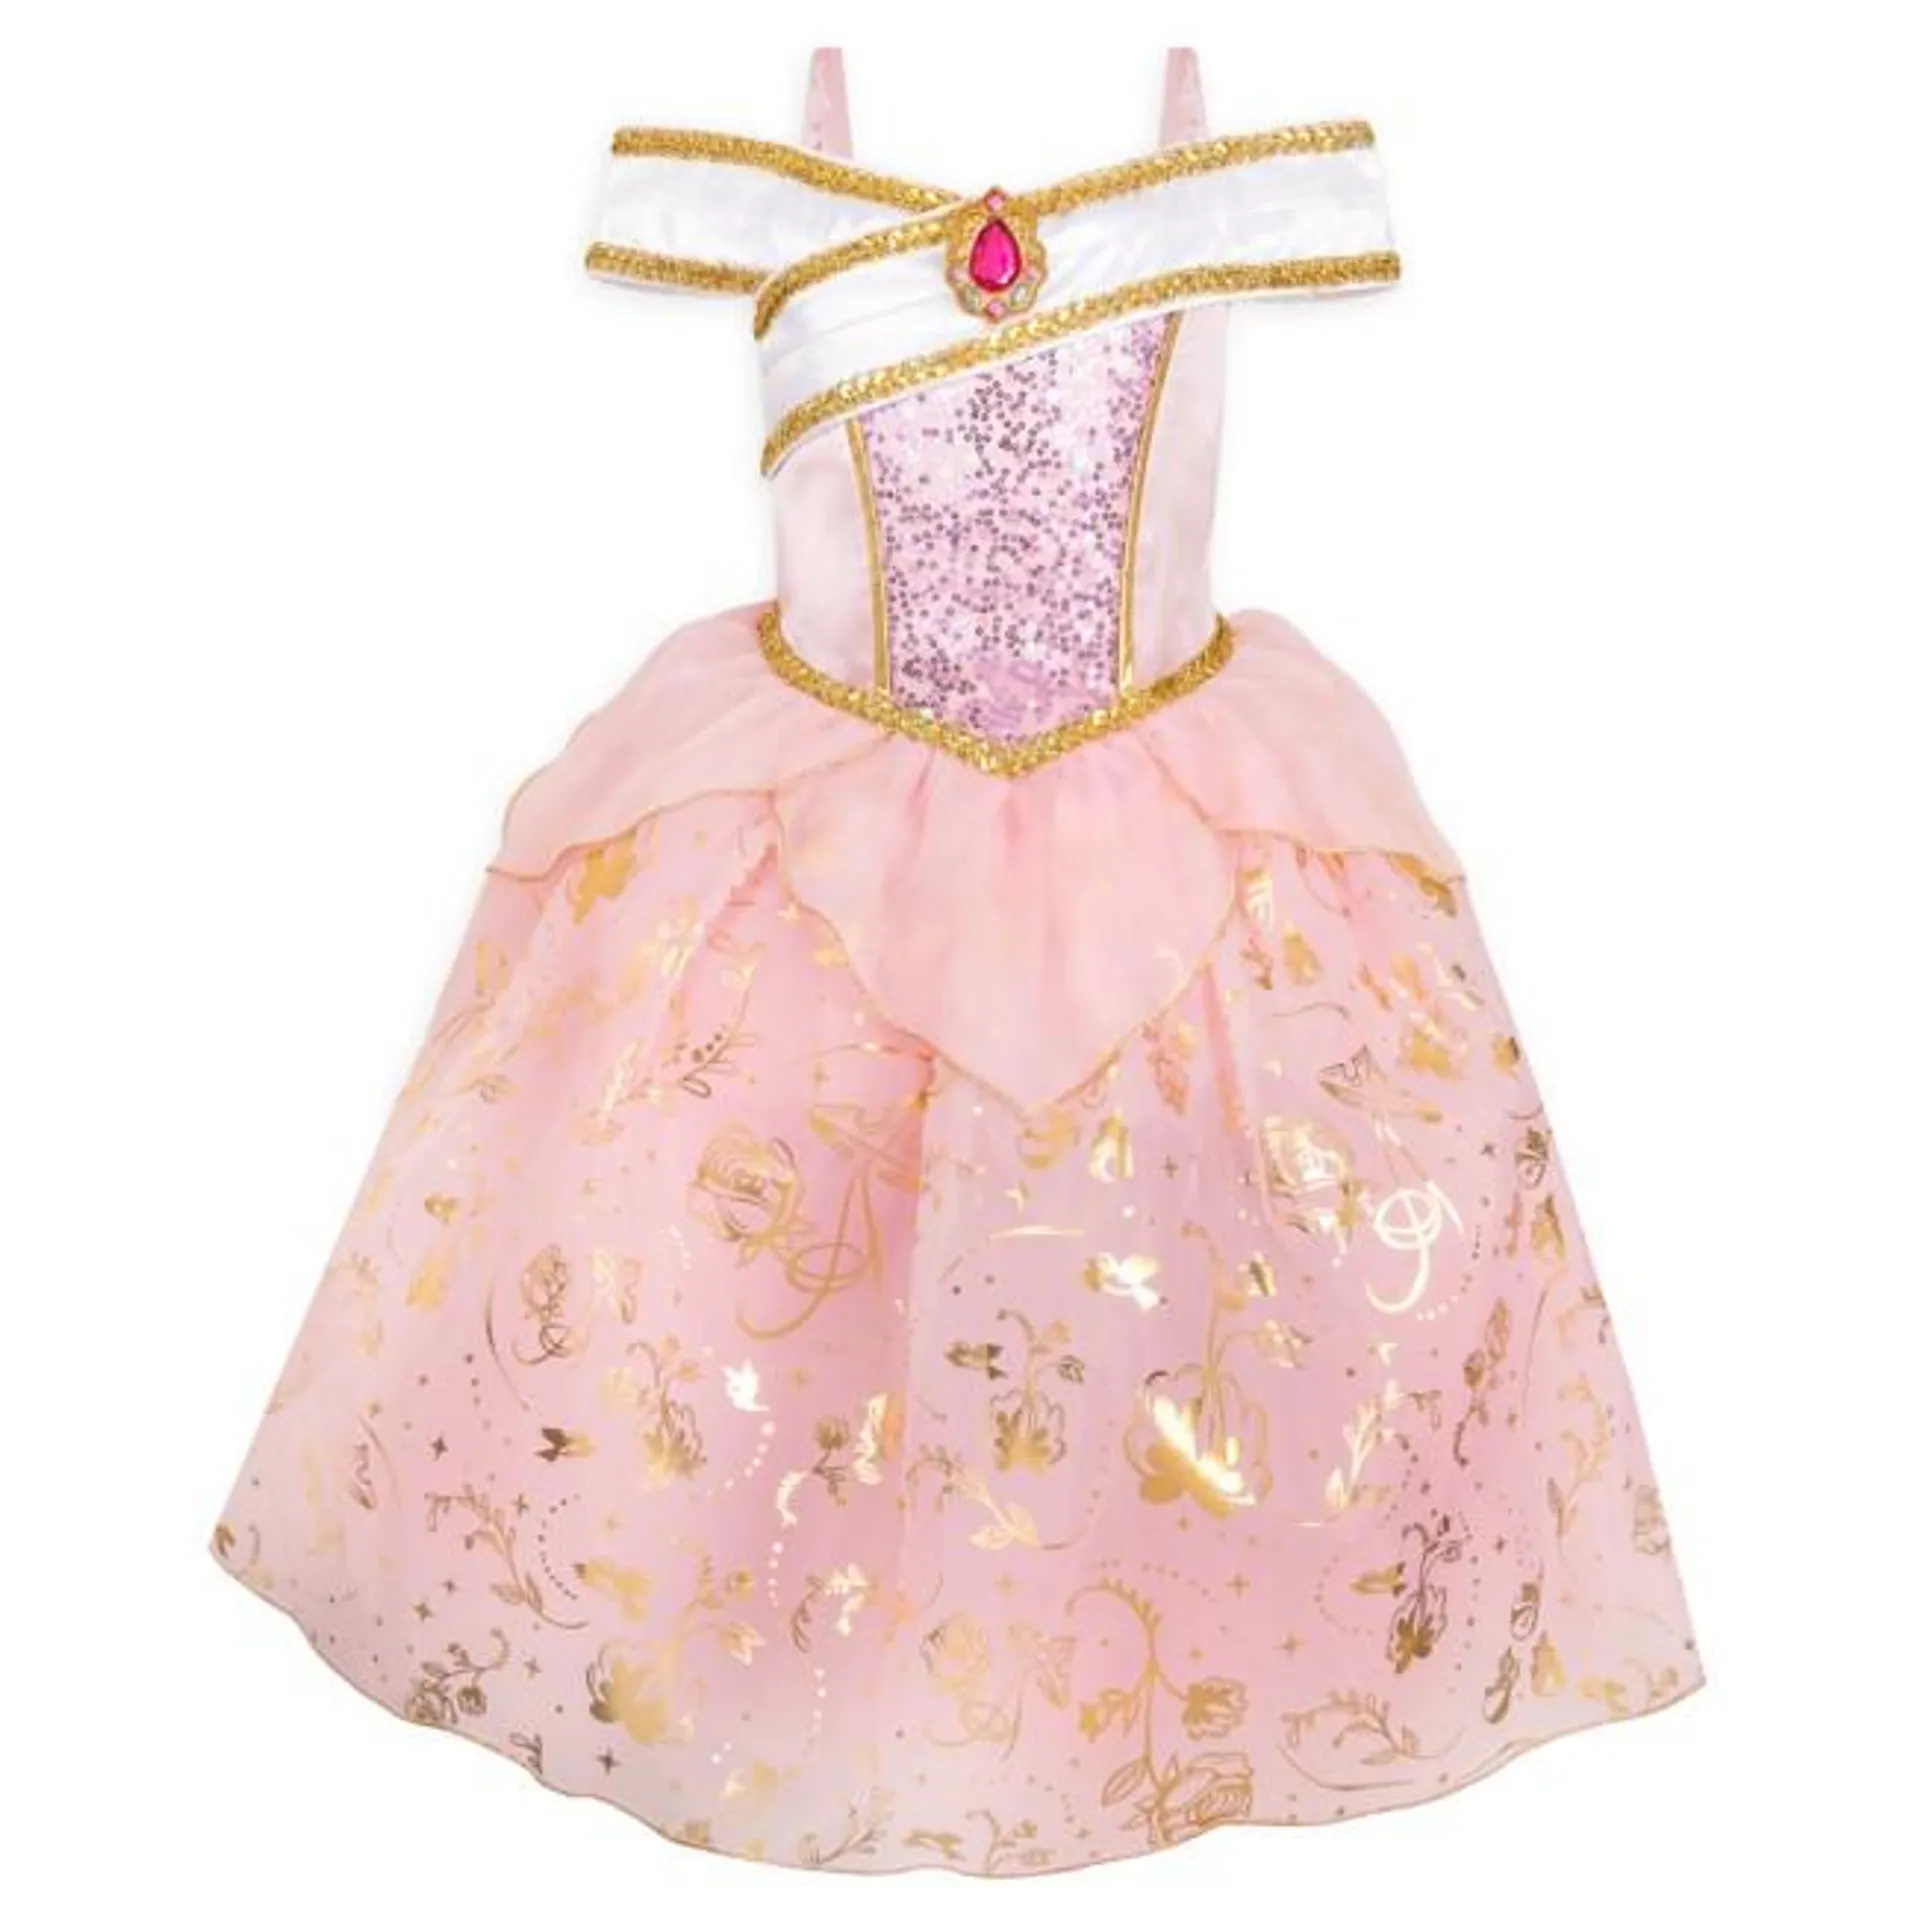 Aurora Costume For Kids, Sleeping Beauty